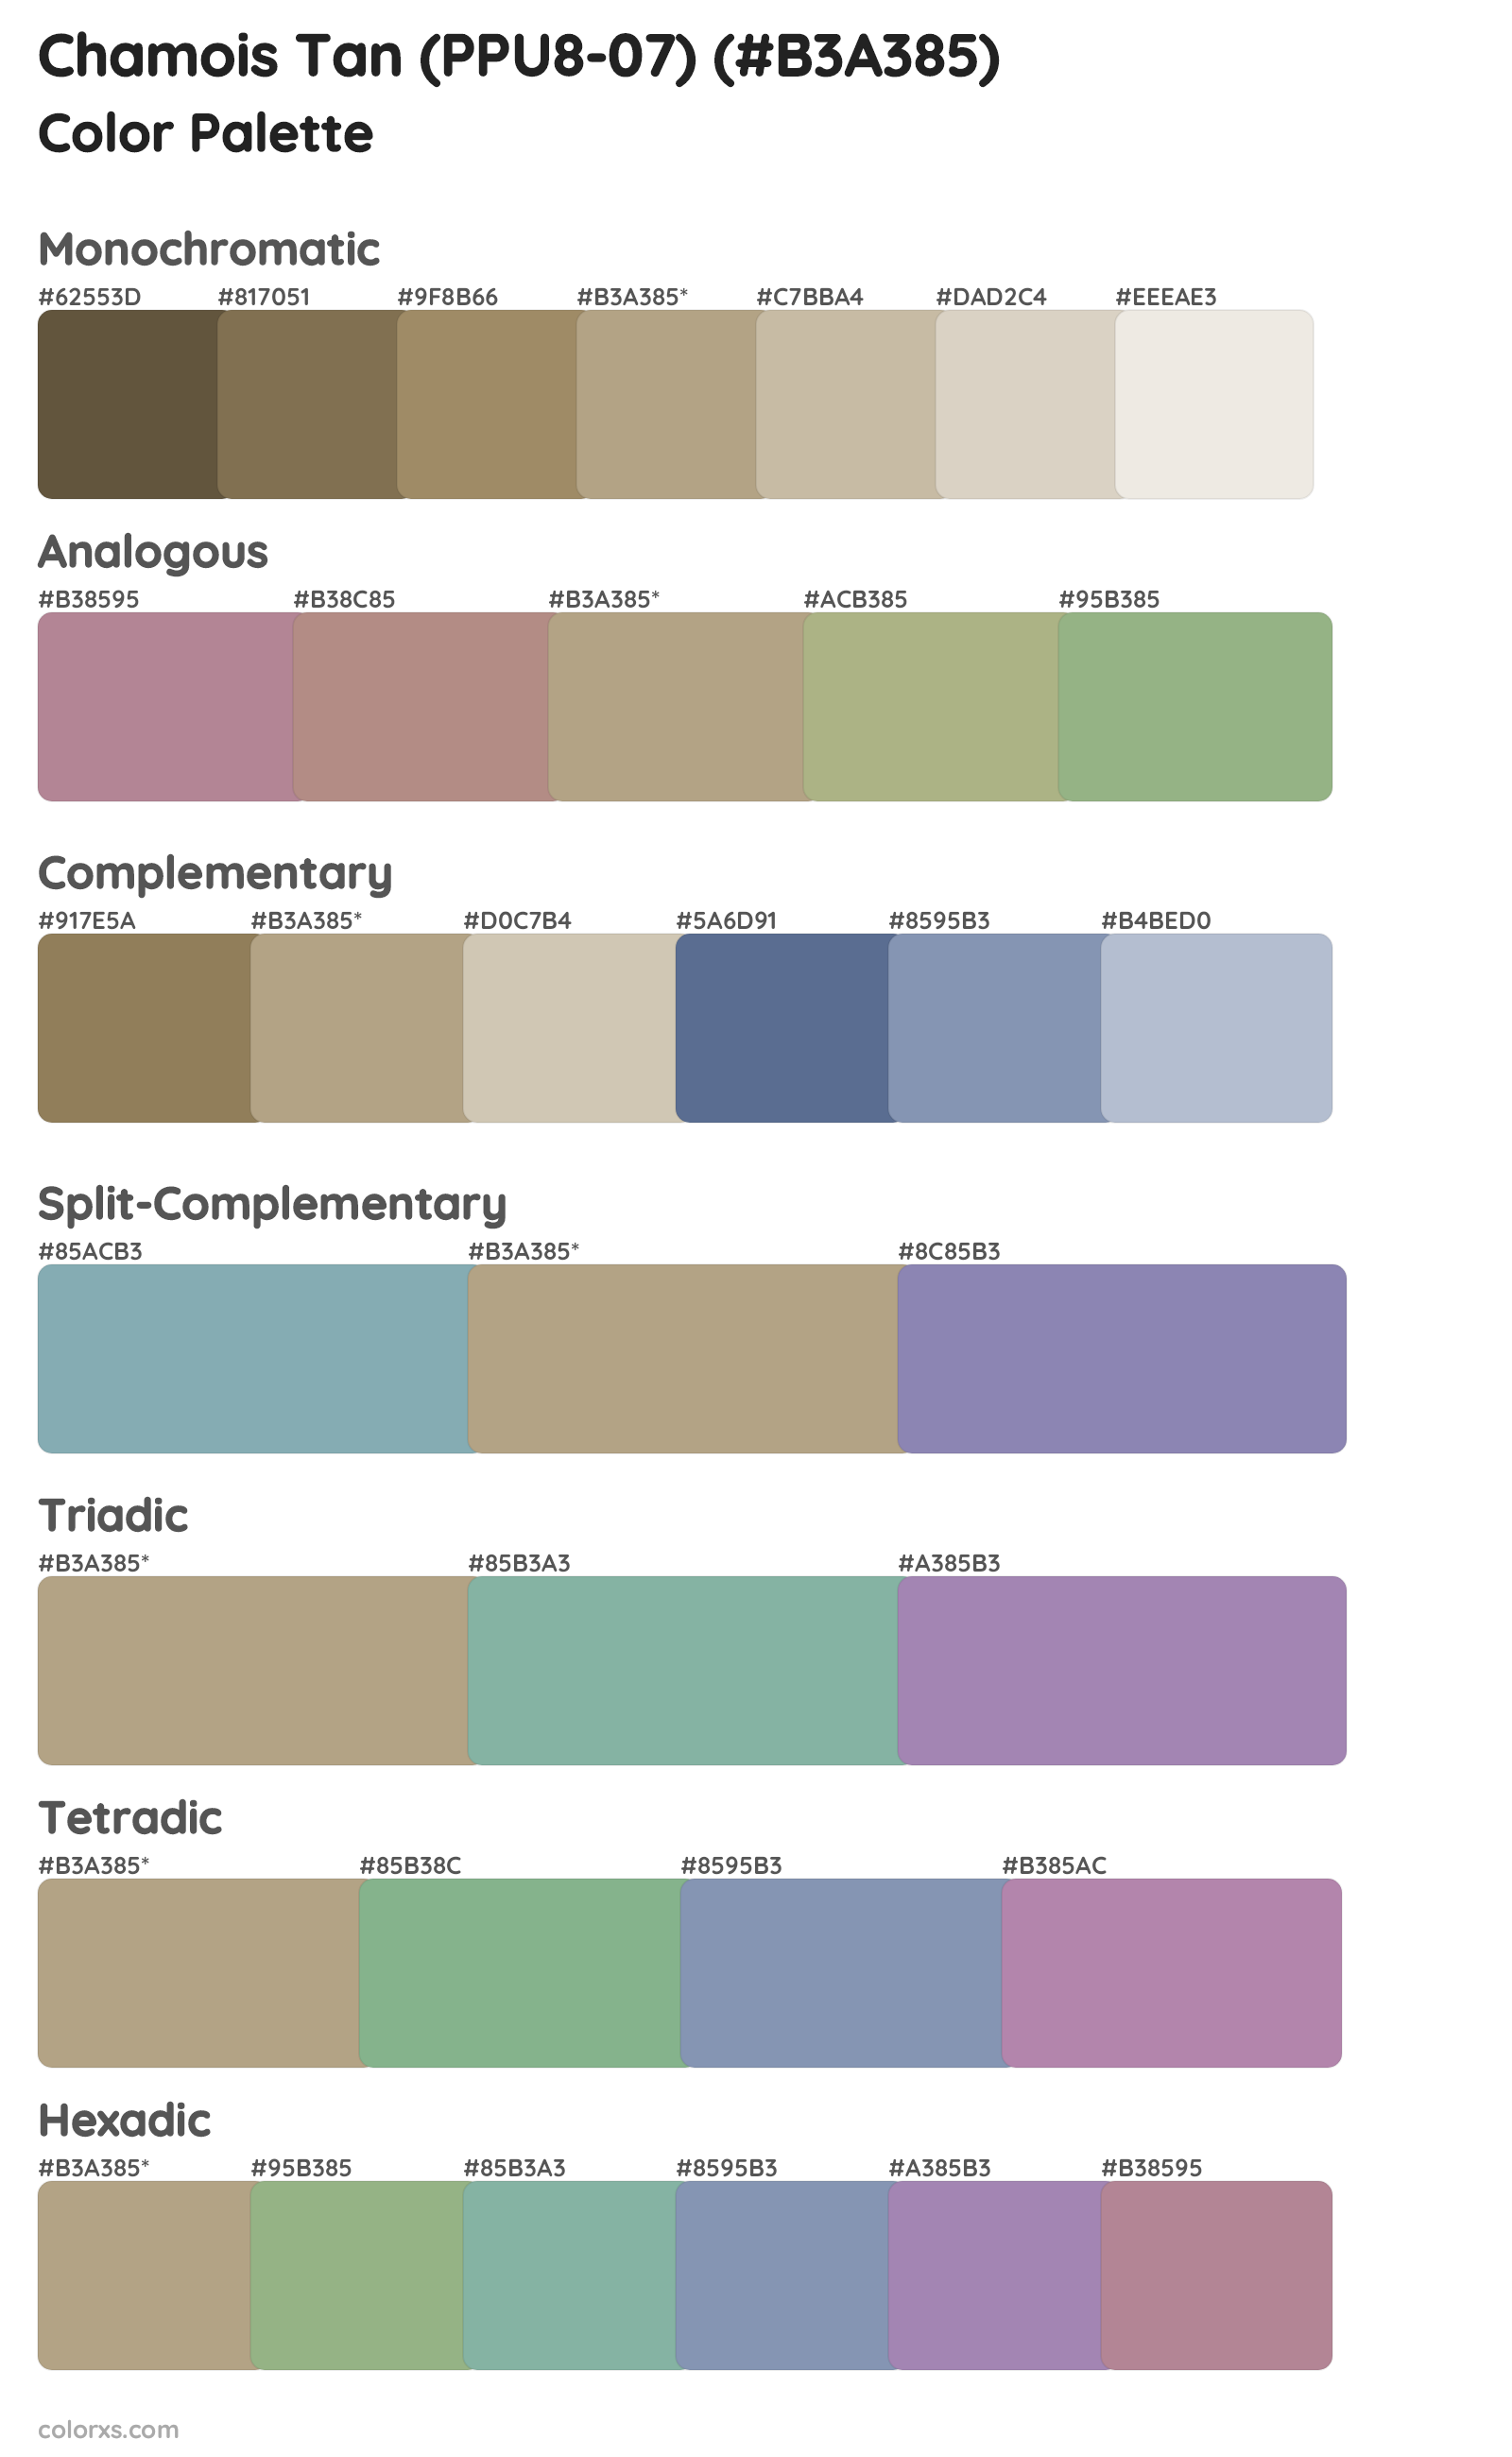 Chamois Tan (PPU8-07) Color Scheme Palettes